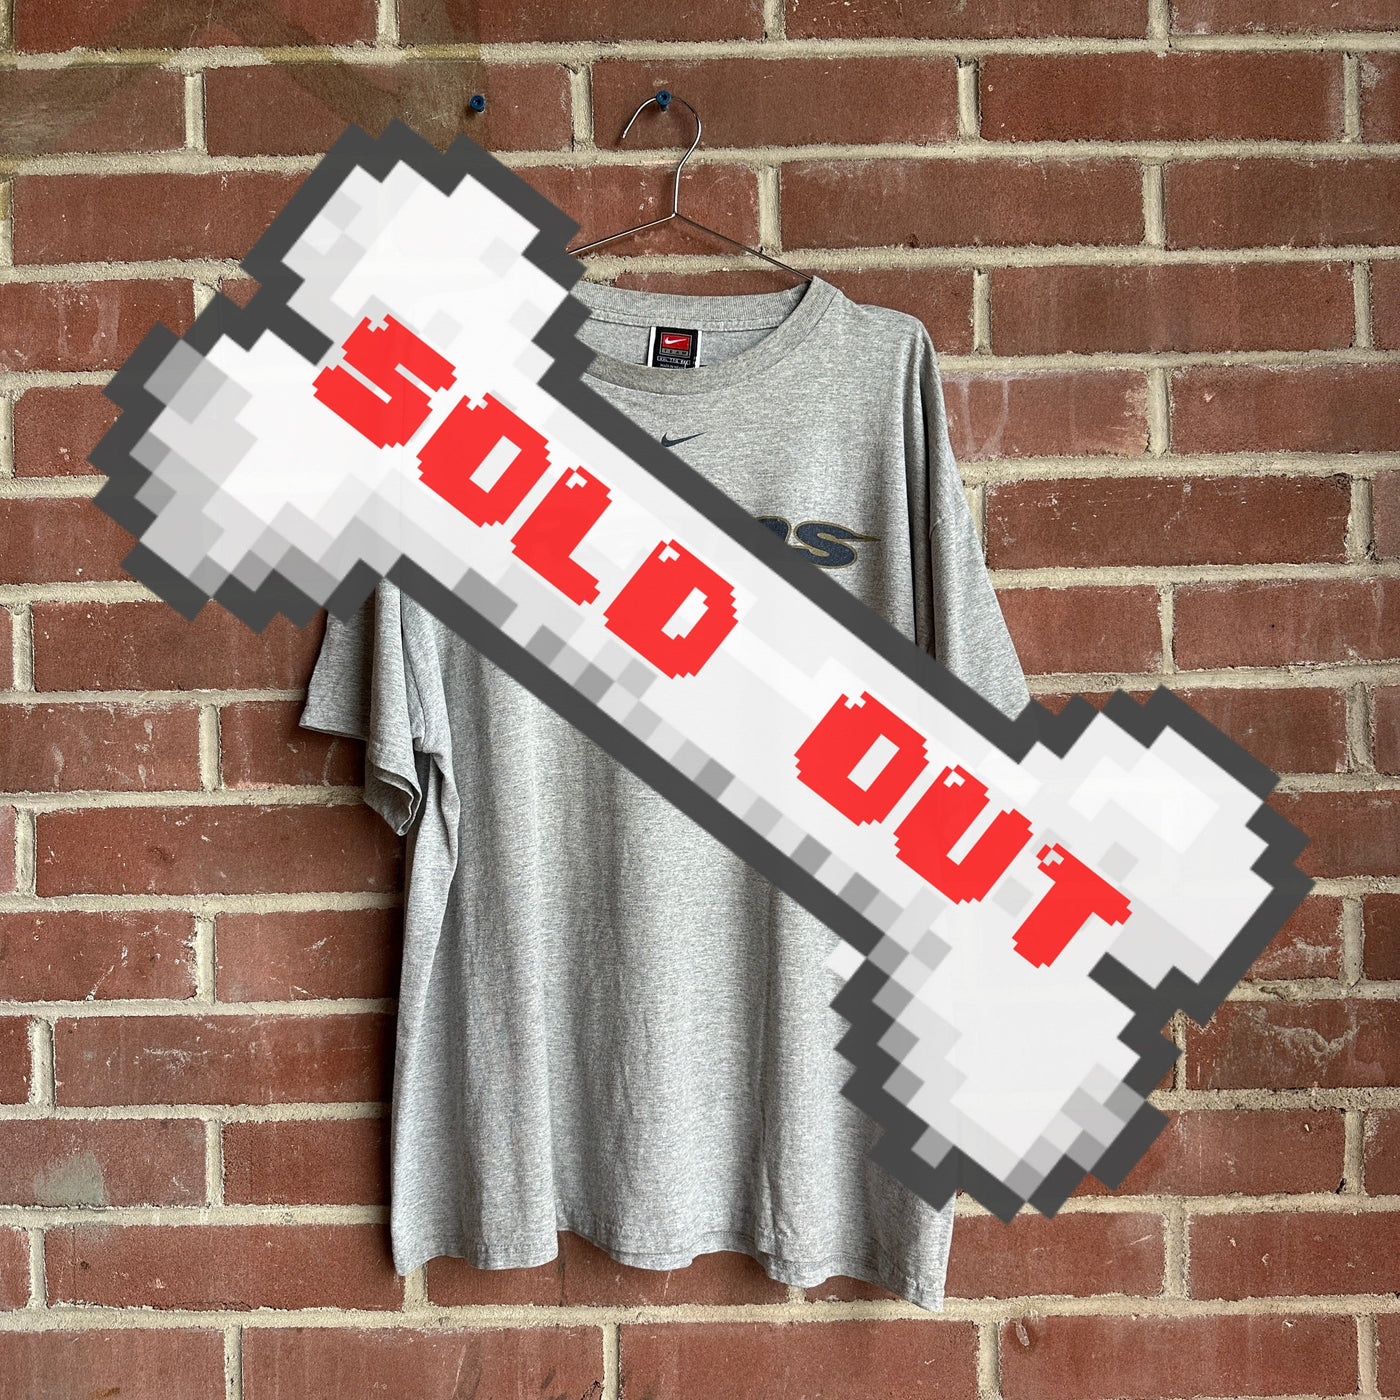 2000s Grey Nike “Rams” T-Shirt